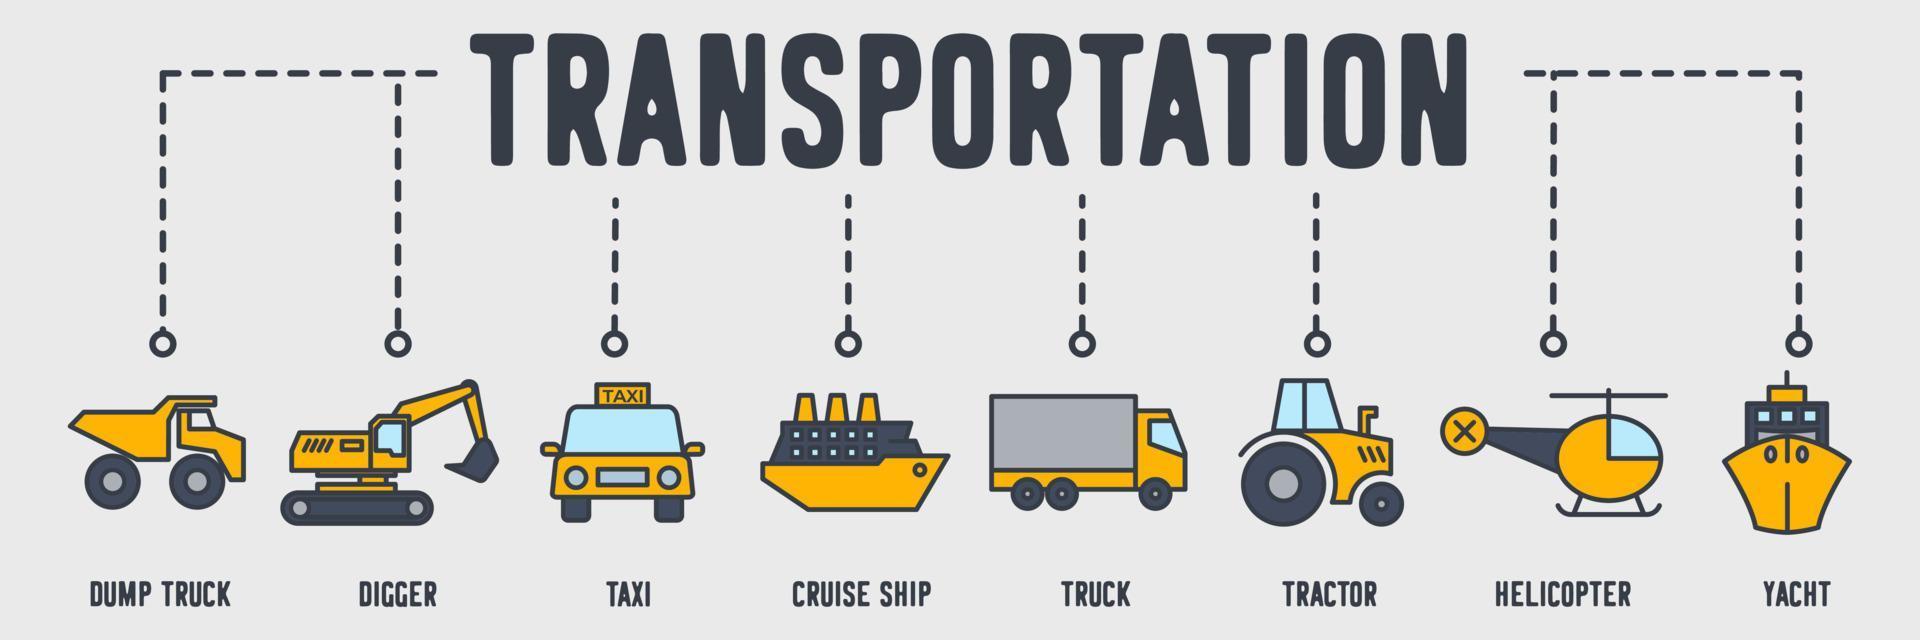 transport fordon banner webbikon. dumper, spårvagn, taxi, kryssningsfartyg, lastbil, traktor, helikopter, yacht, gaffeltruck vektor illustration koncept.